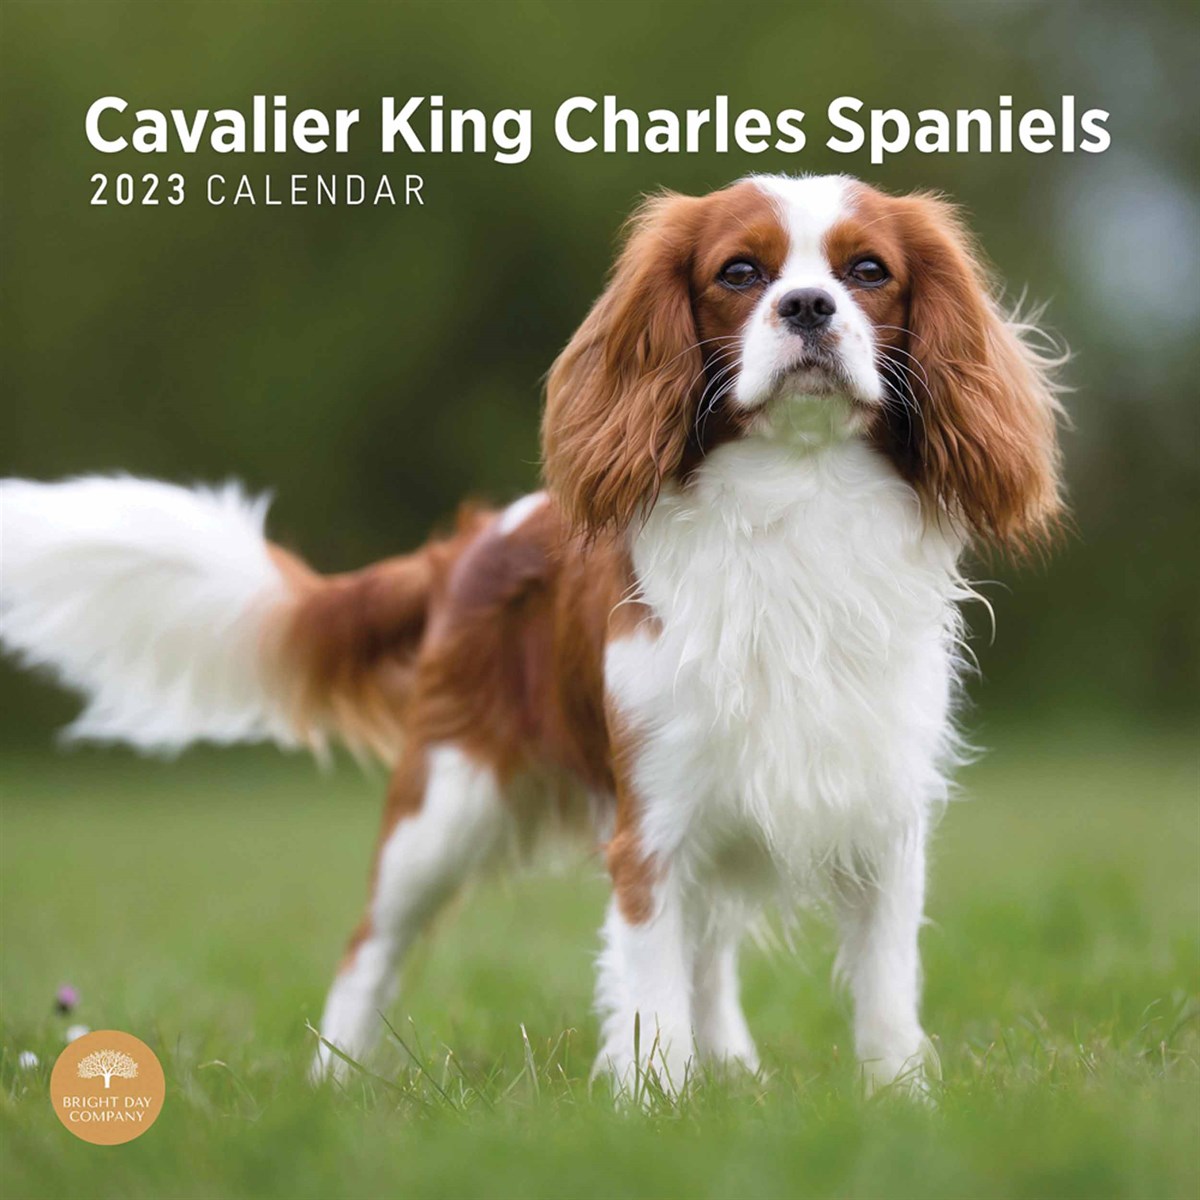 Just Cavalier King Charles Spaniels 2023 Calendars